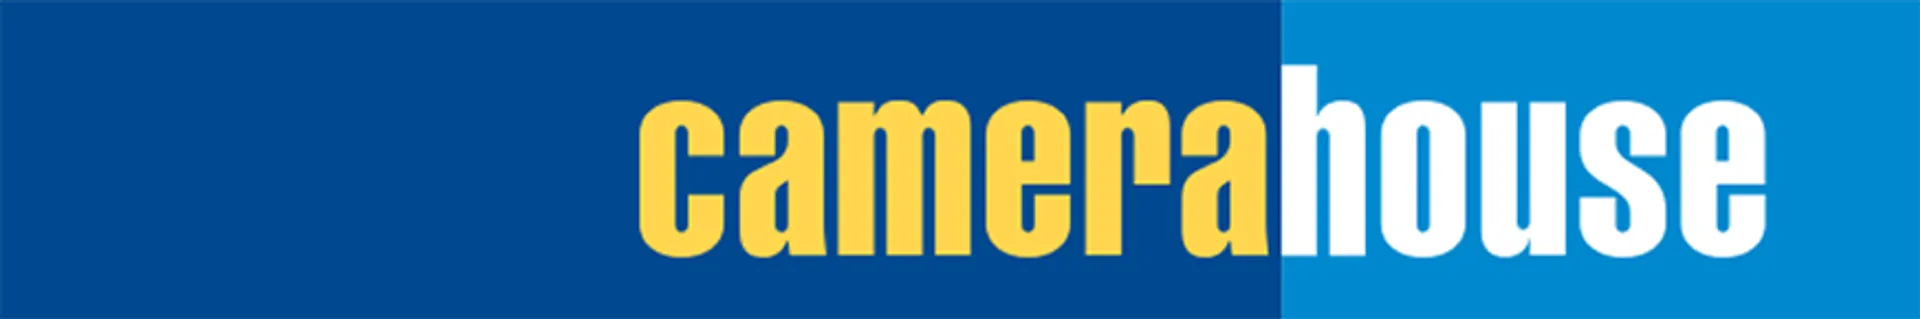 CAMERA HOUSE logo